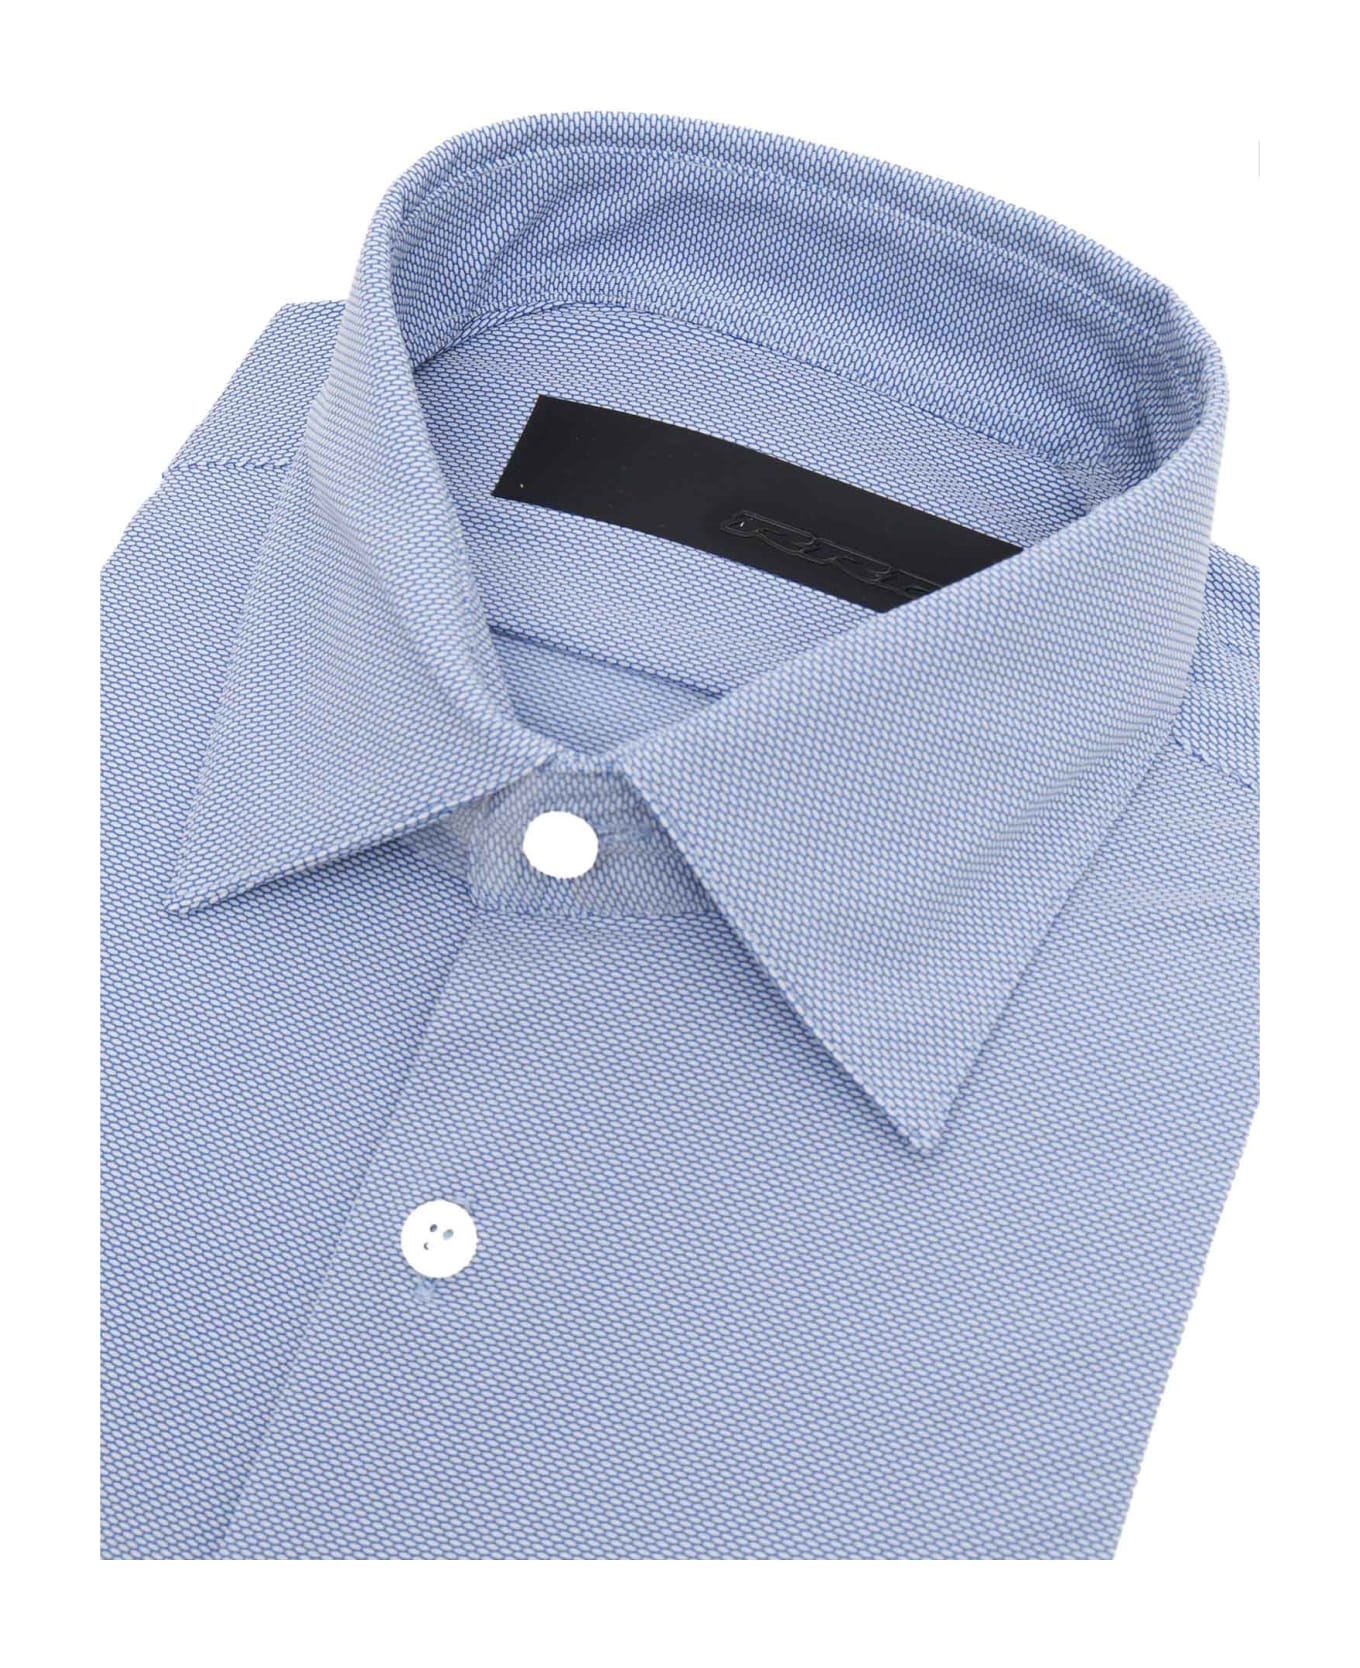 RRD - Roberto Ricci Design Jacquard Oxford Shirt - LIGHT BLUE